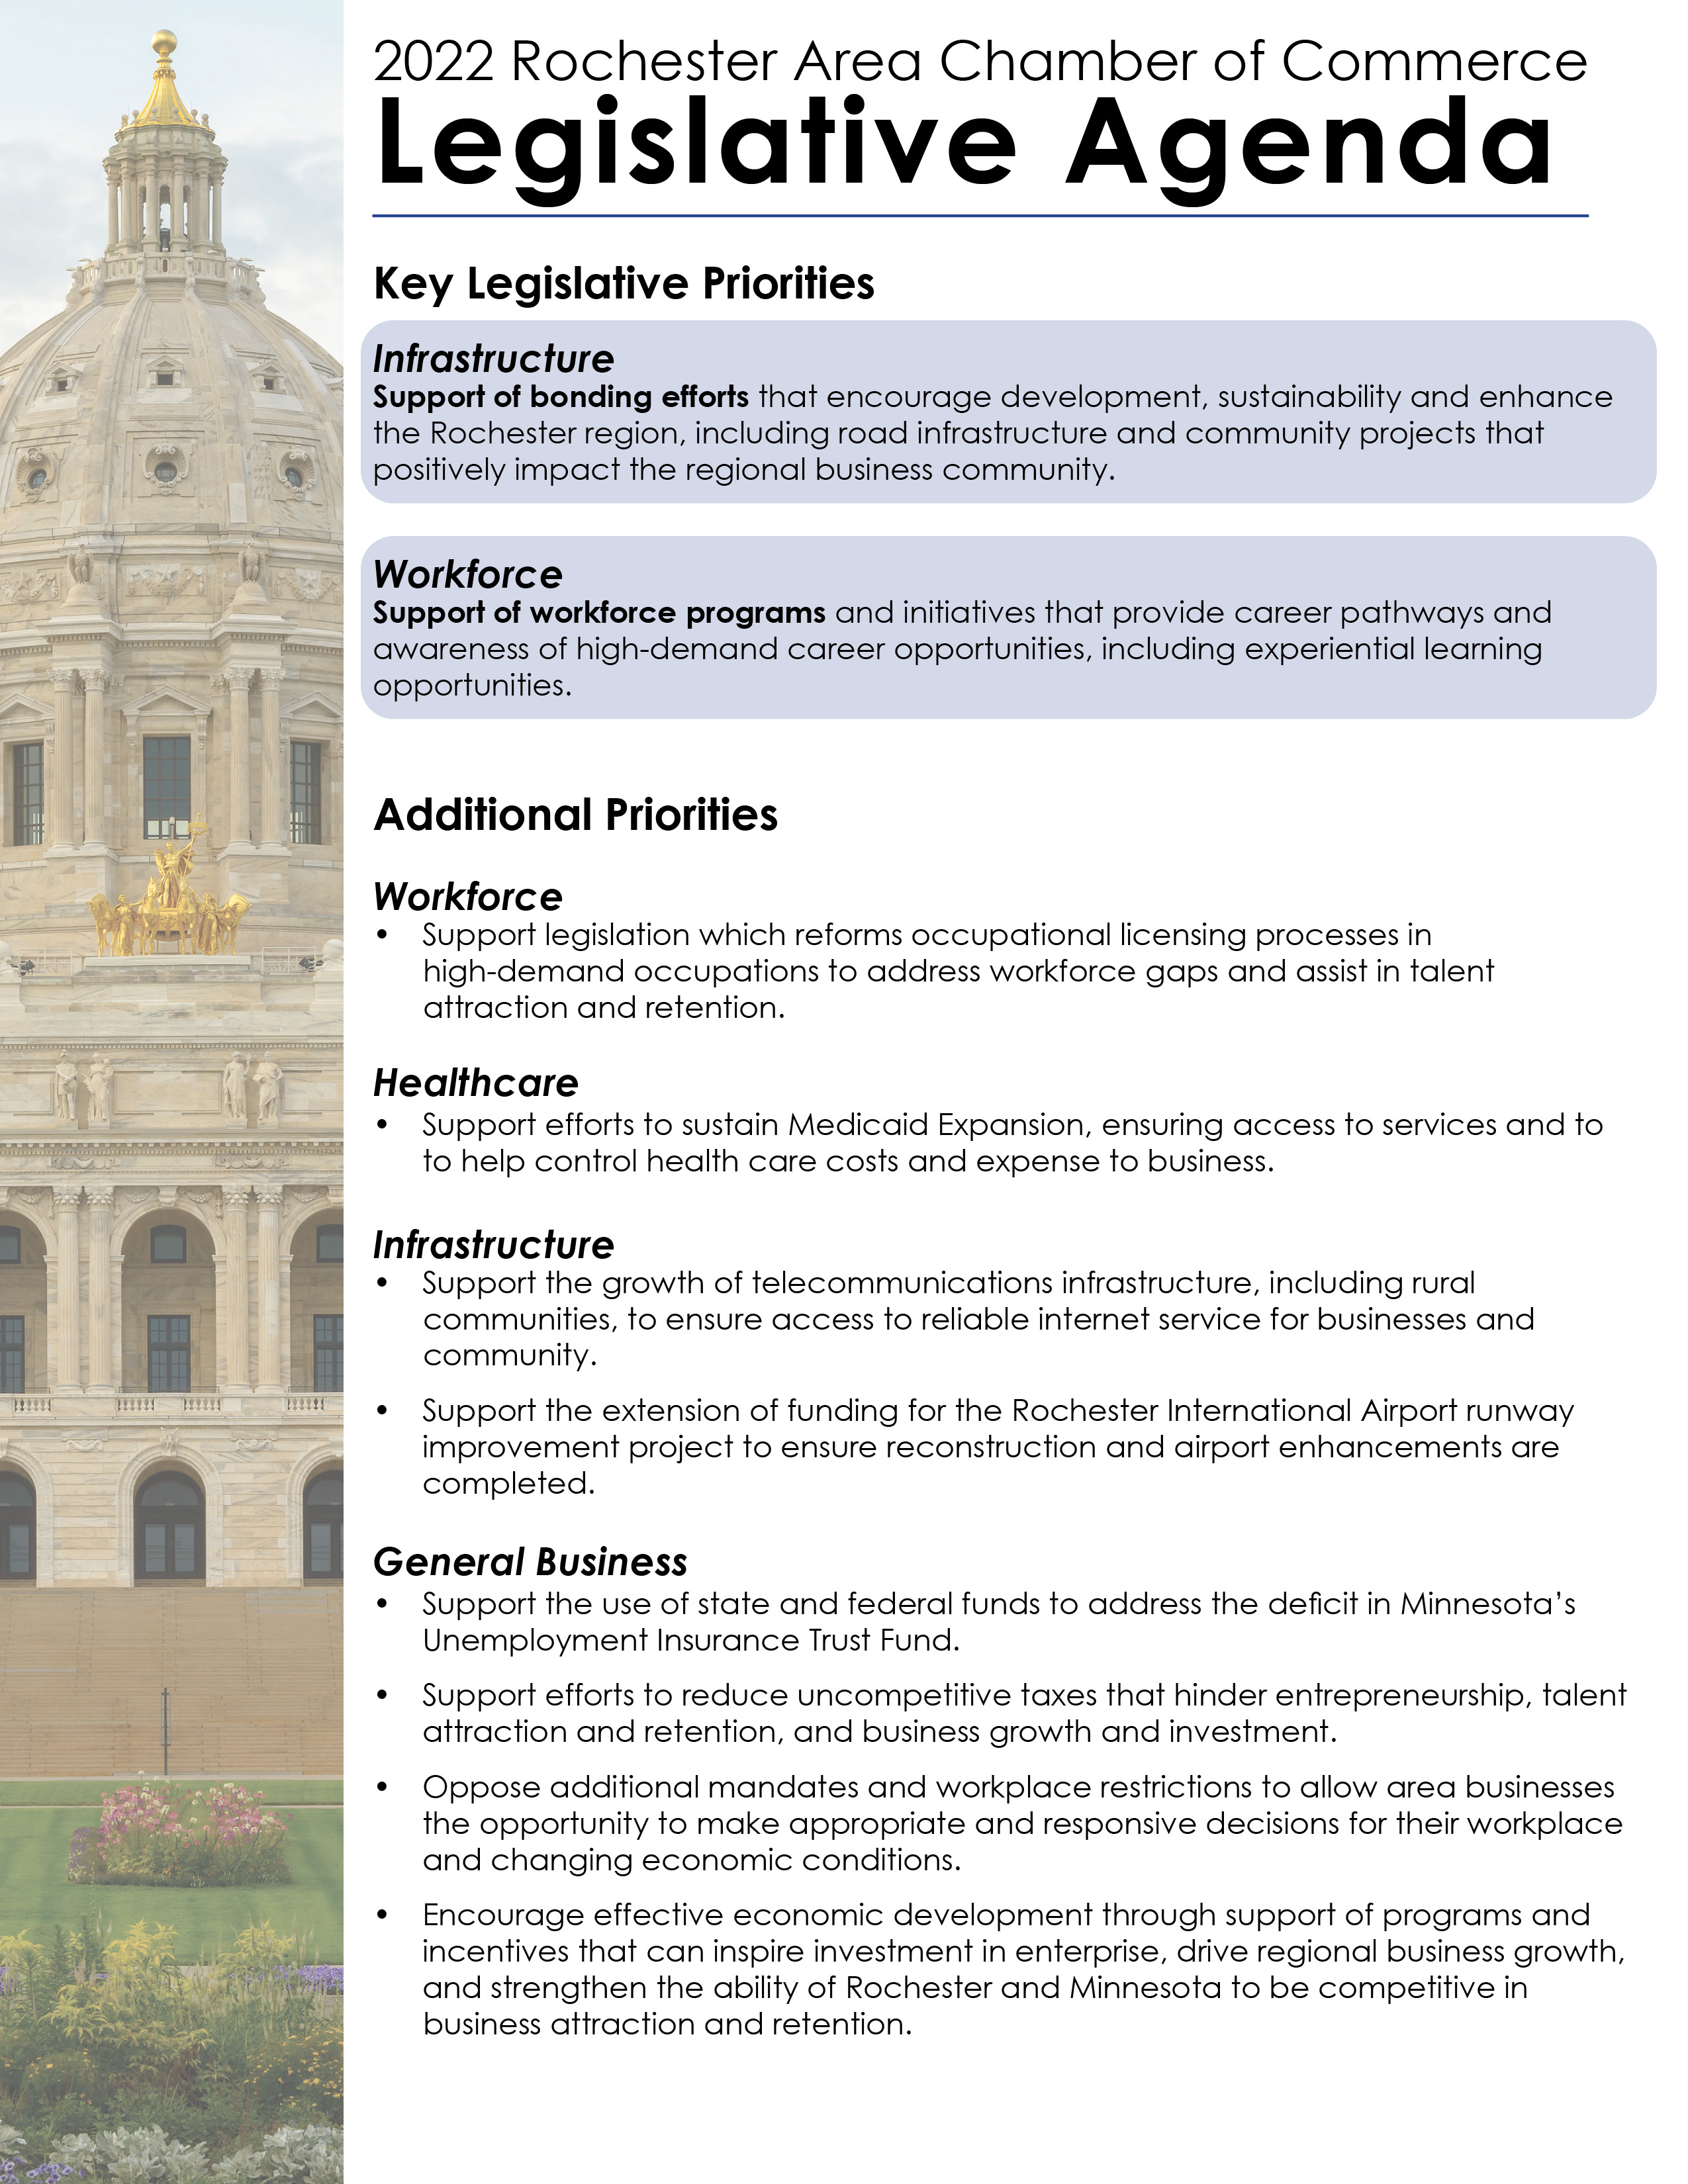 2022 Legislative Agenda